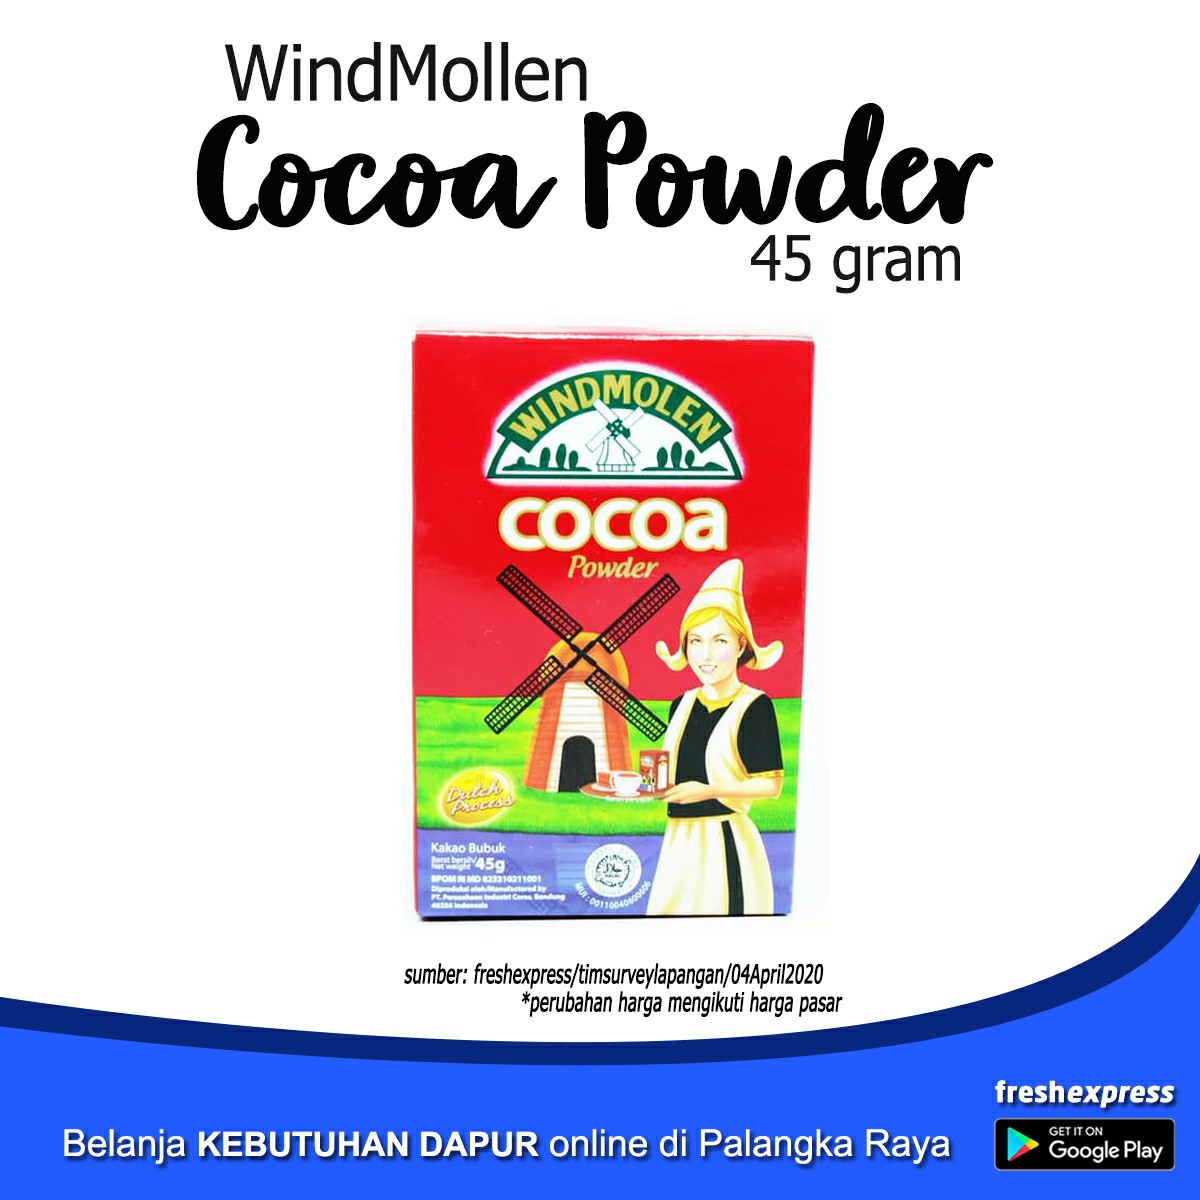 WindMollen Cocoa Powder 45 Gram